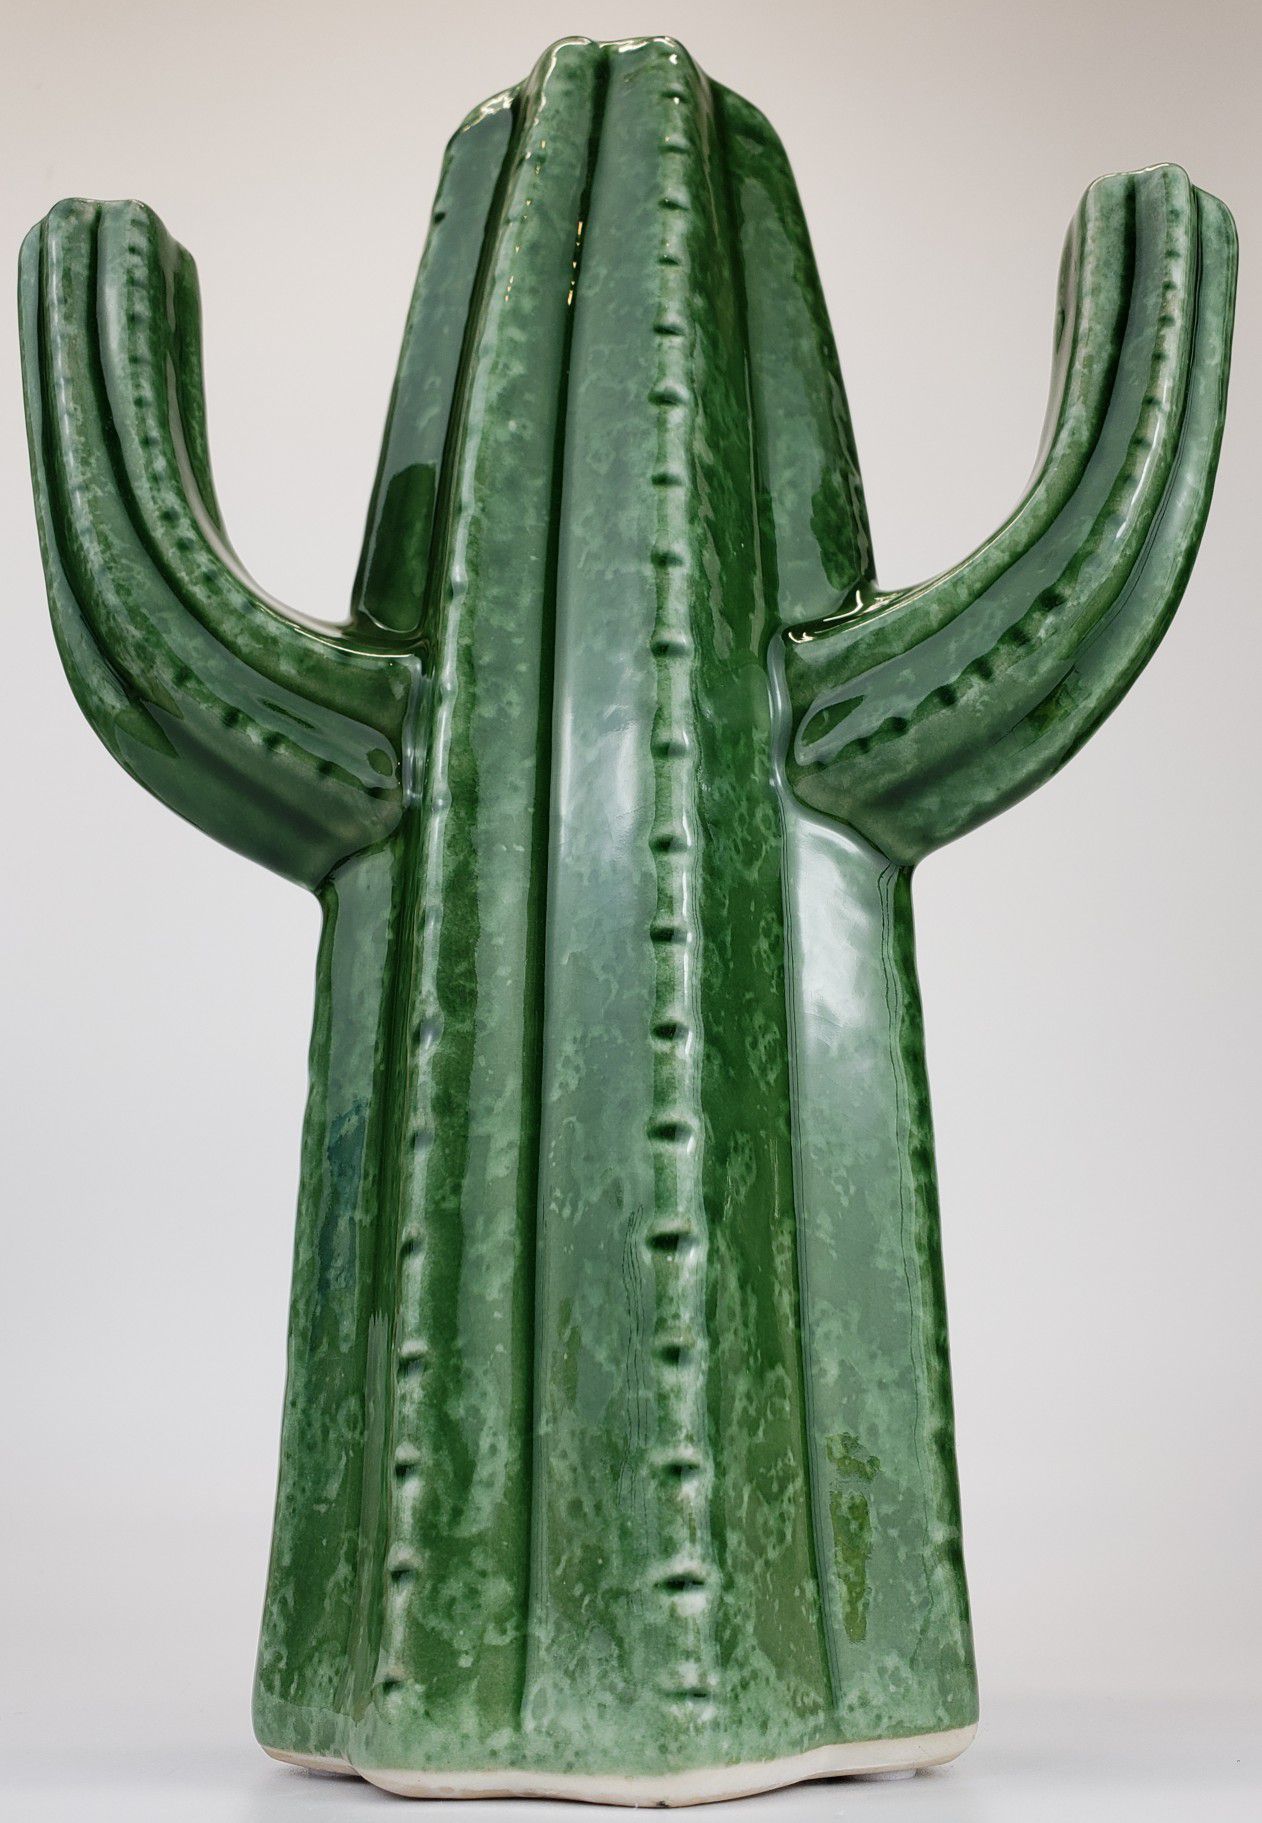 Adorable Saguaro 3 Arm Cactus Ceramic/Pottery Vase - LARGE!